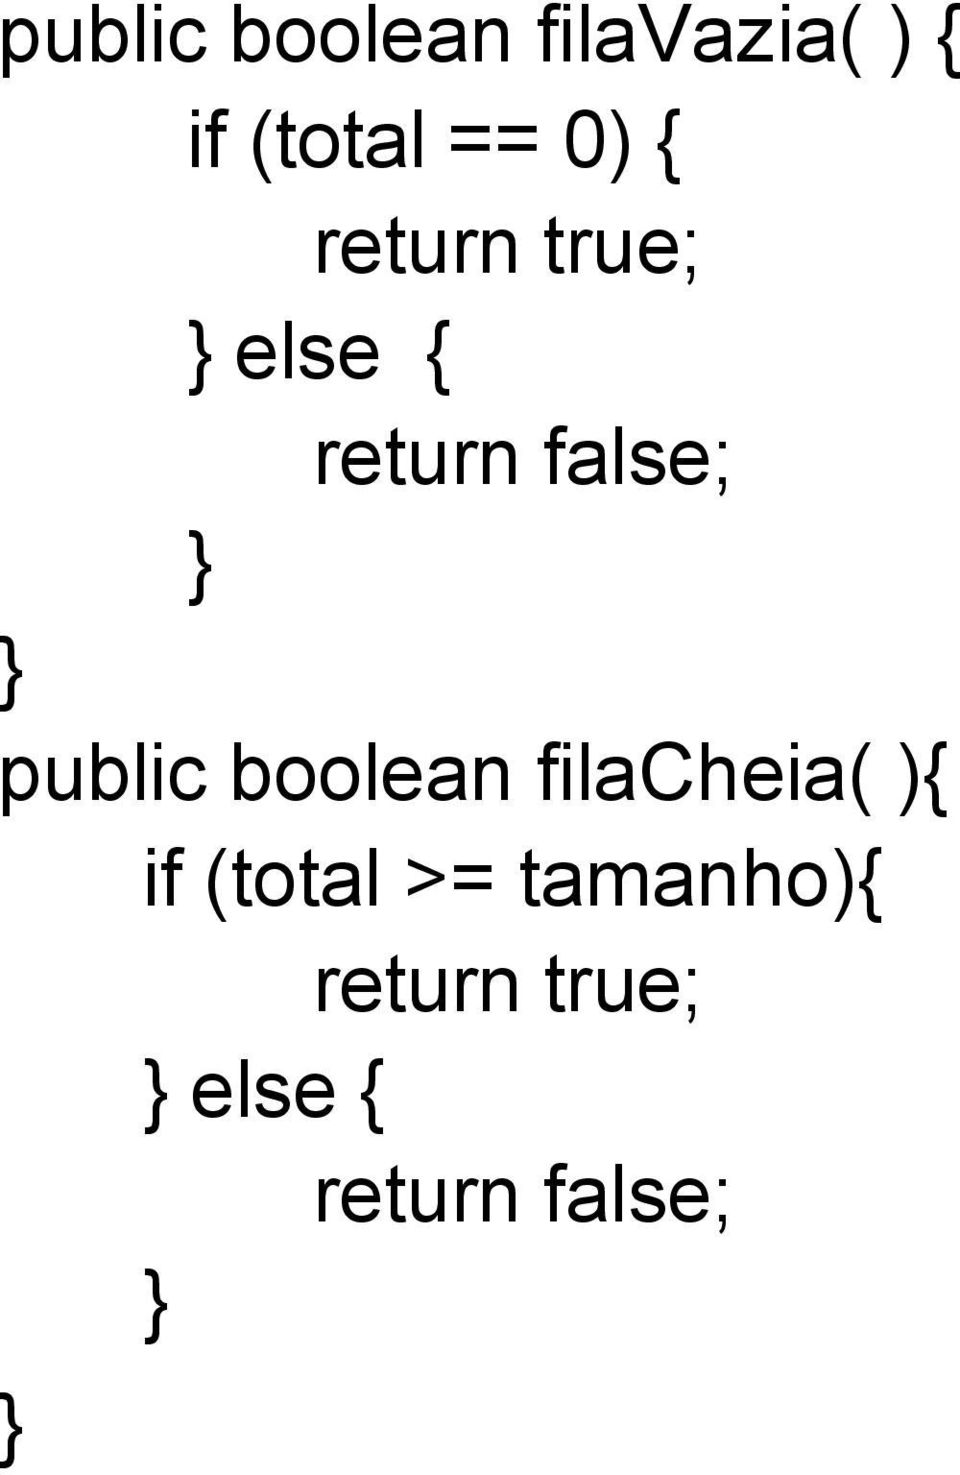 public boolean filacheia( ){ if (total >=